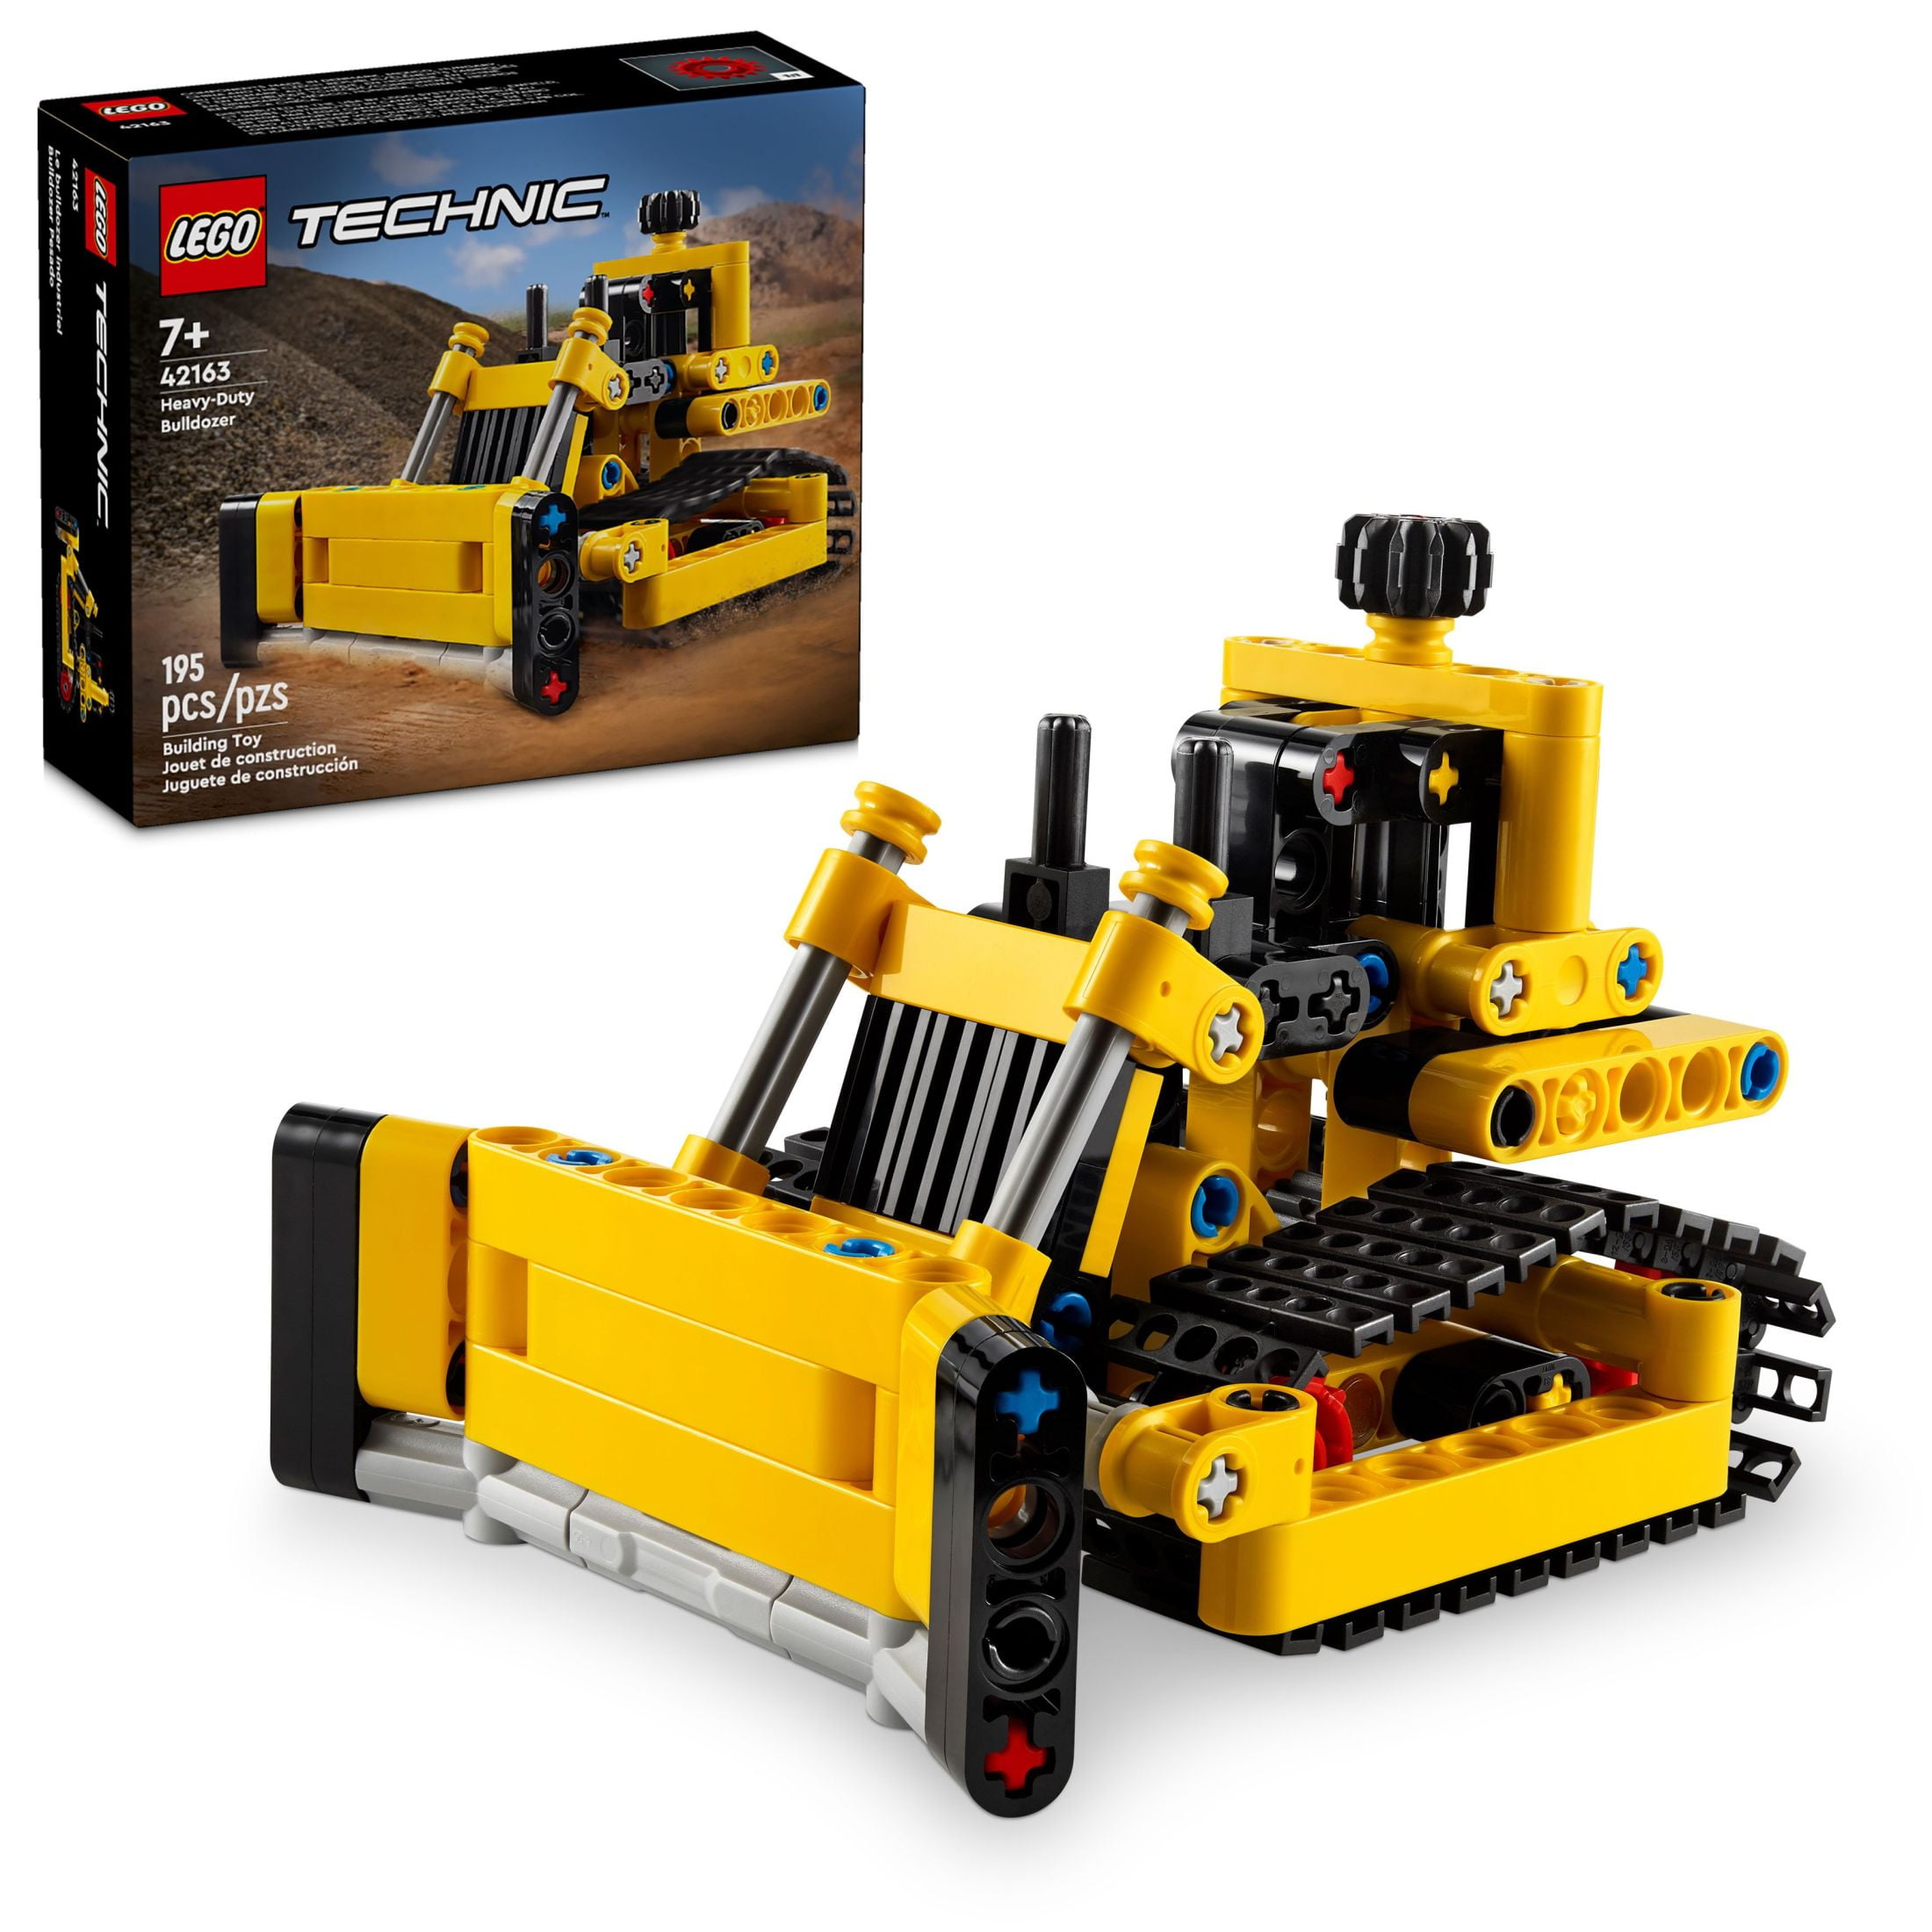 Lego Duplo Base Plate Green 24 x 24 Studs 15” x 15” - EUC & Clean